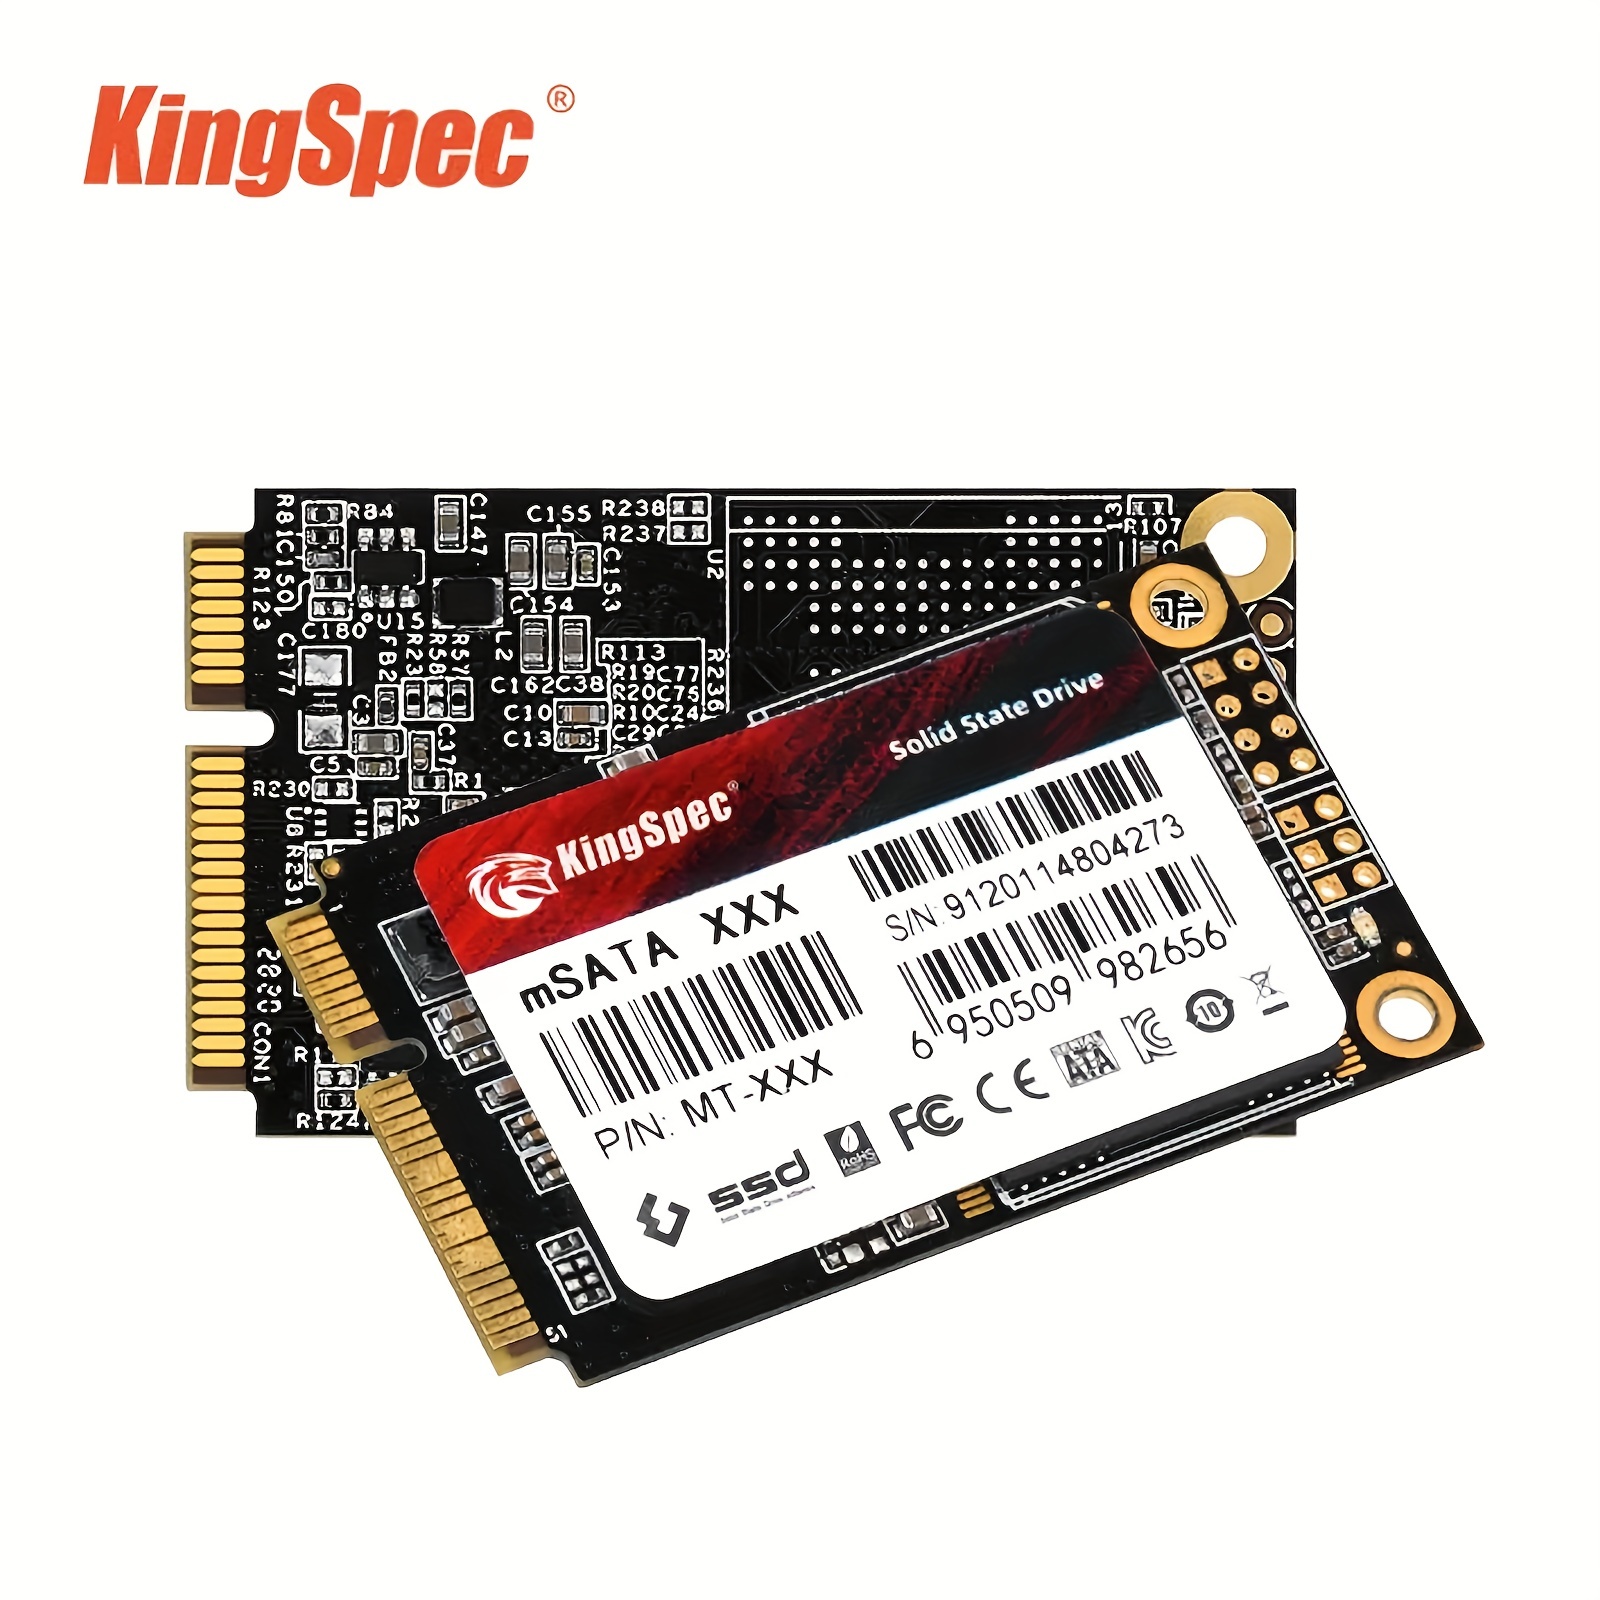 KingSpec M.2 SATA SSD, 128GB 2242 SATA III 6Gbps Internal M.2 SSD,  Ultra-Slim NGFF State Drive for Desktop/Laptop/Notebook (2242, 128GB)